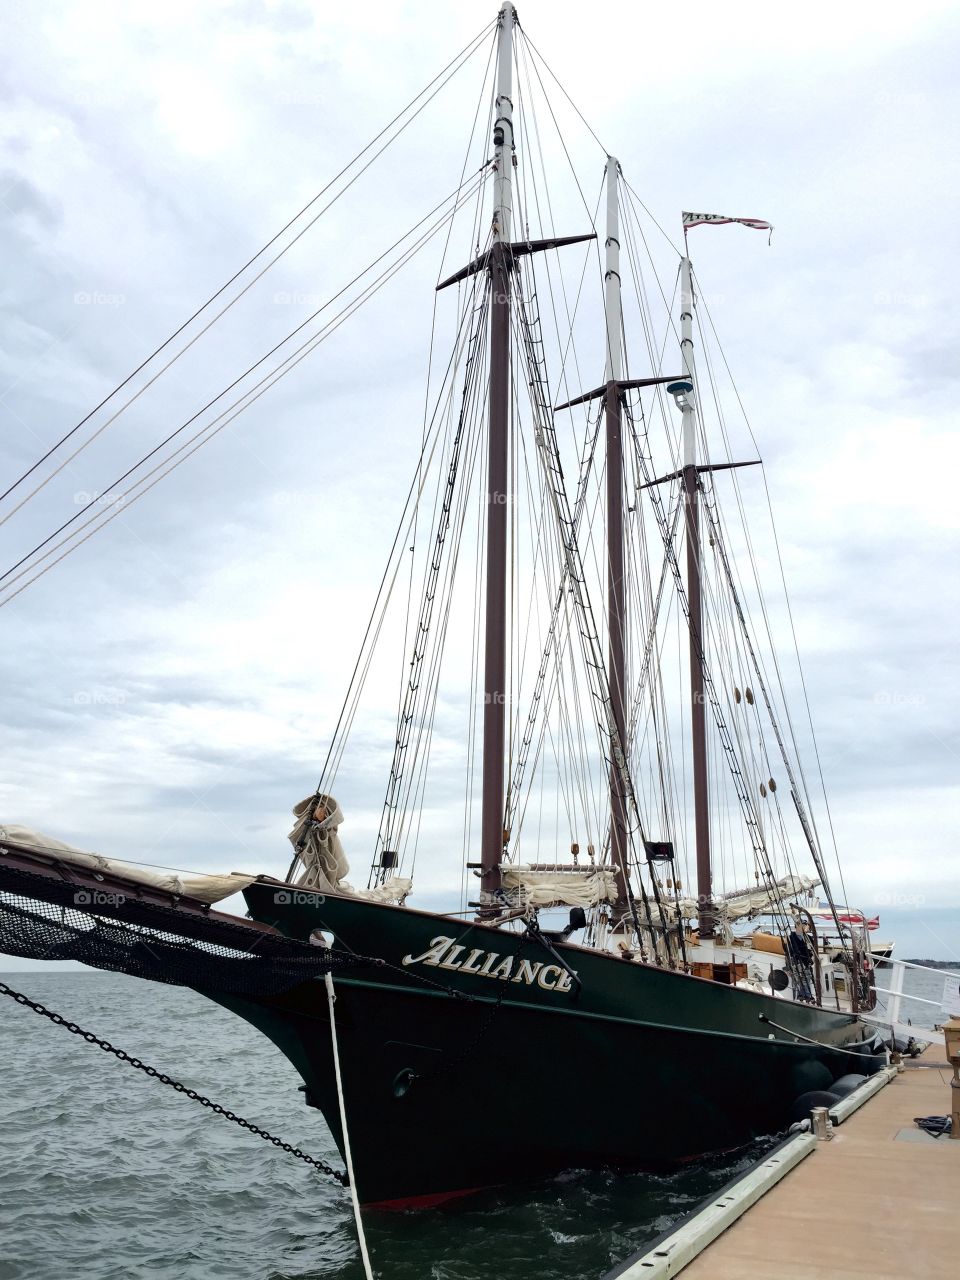 Alliance Schooner. Sailboat/schooner tour in Williamsburg, VA